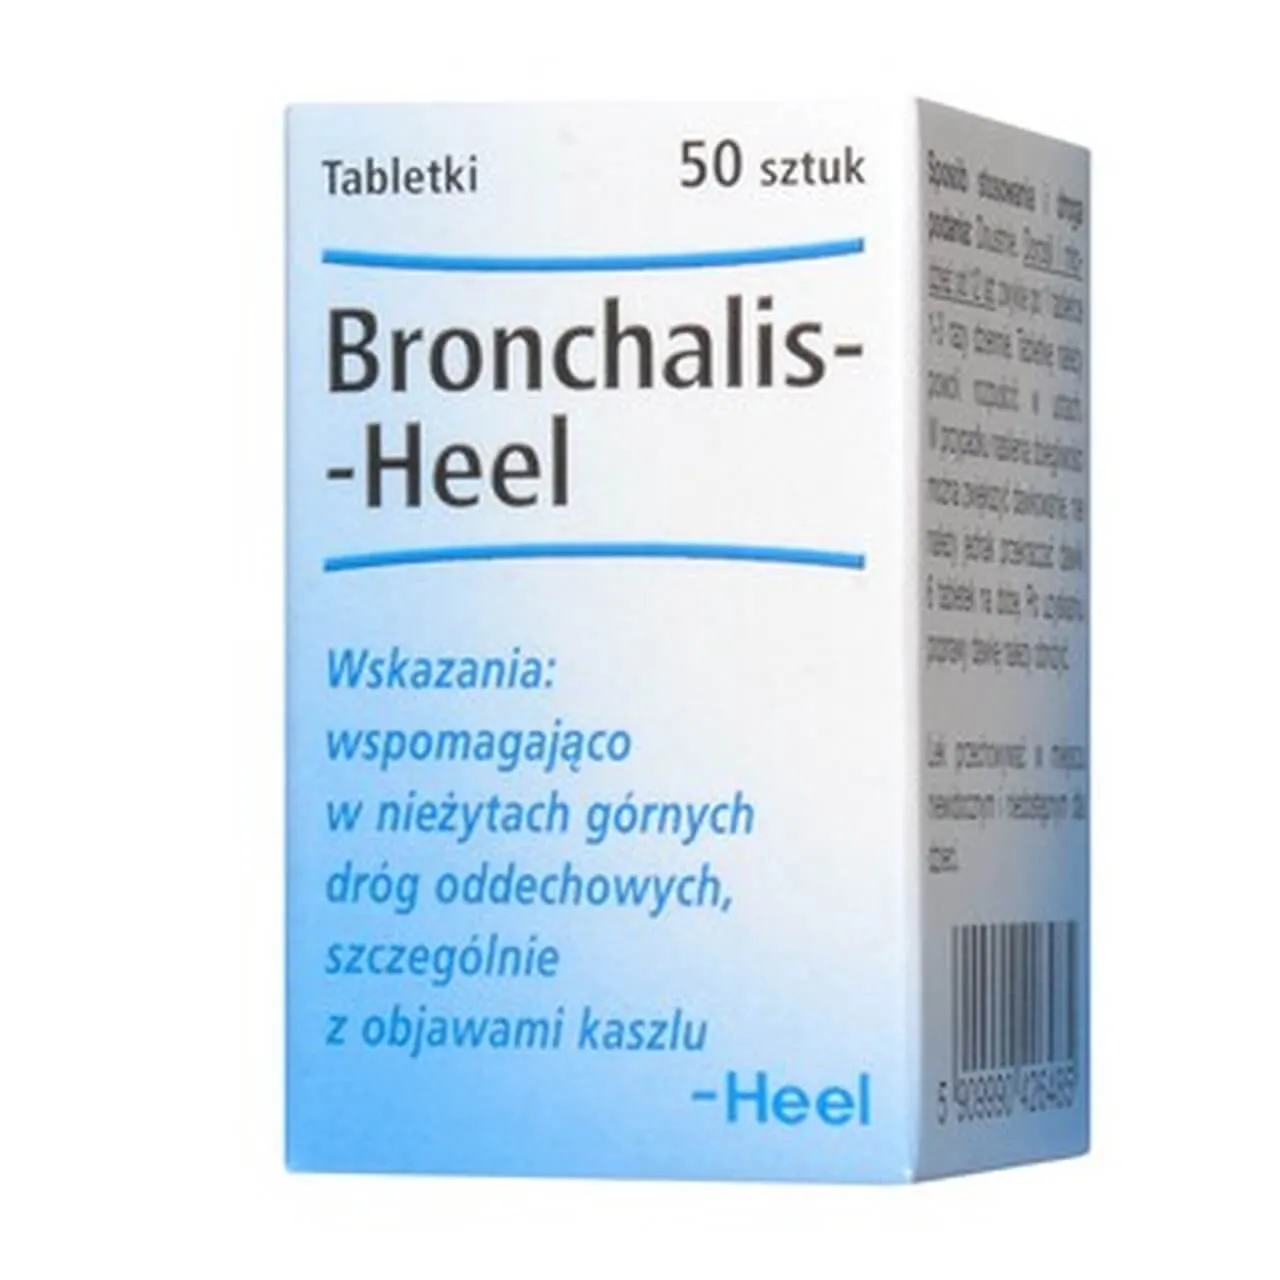 HEEL, Bronchalis, 50 tabletek